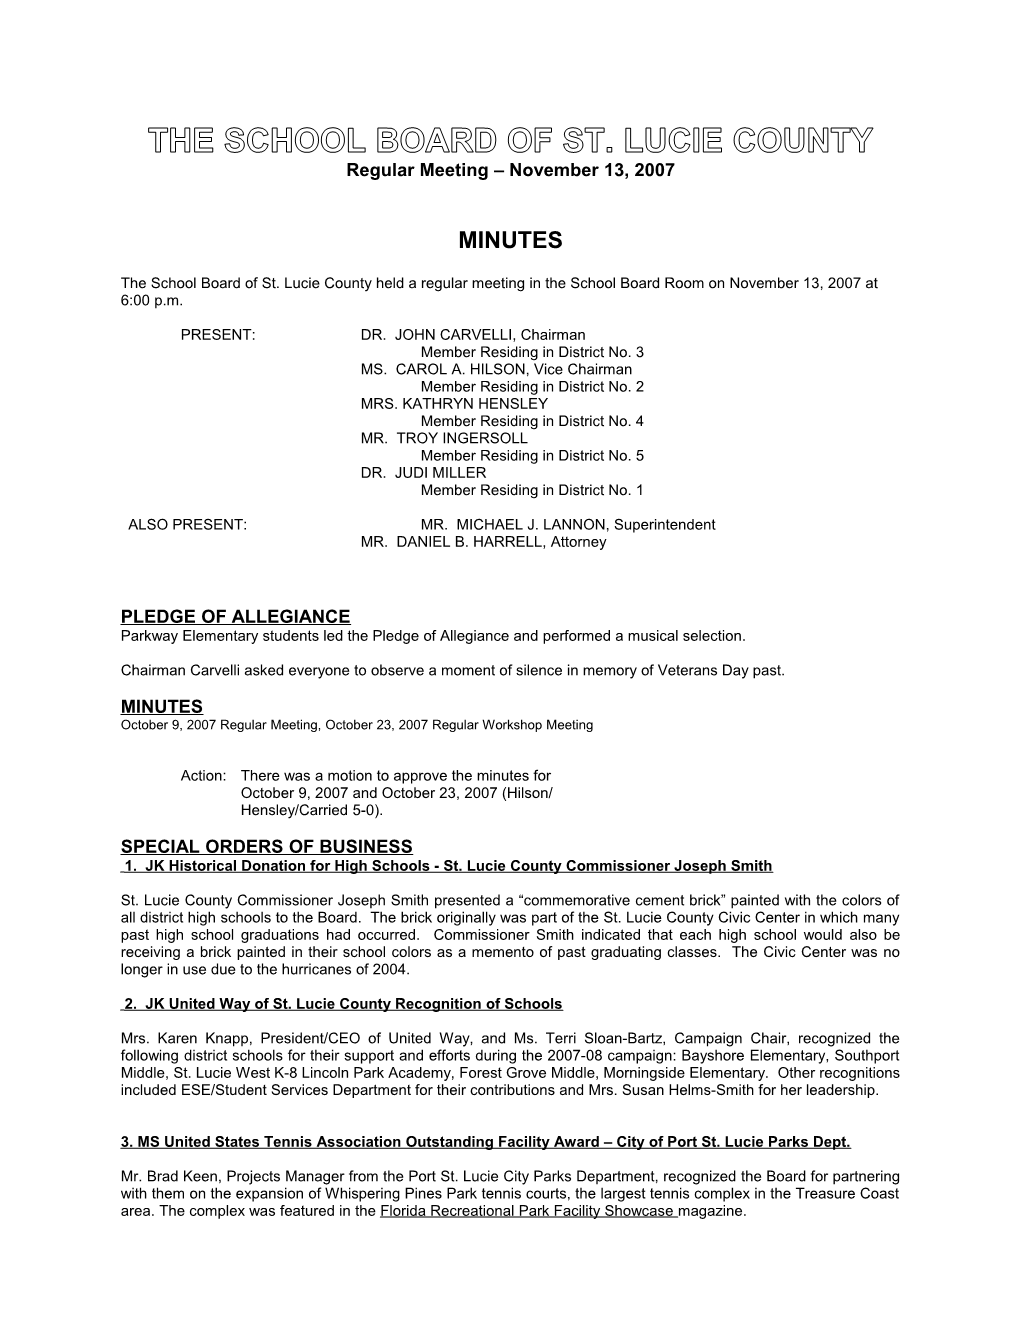 11-13-07 SLCSB Regular Meeting Minutes